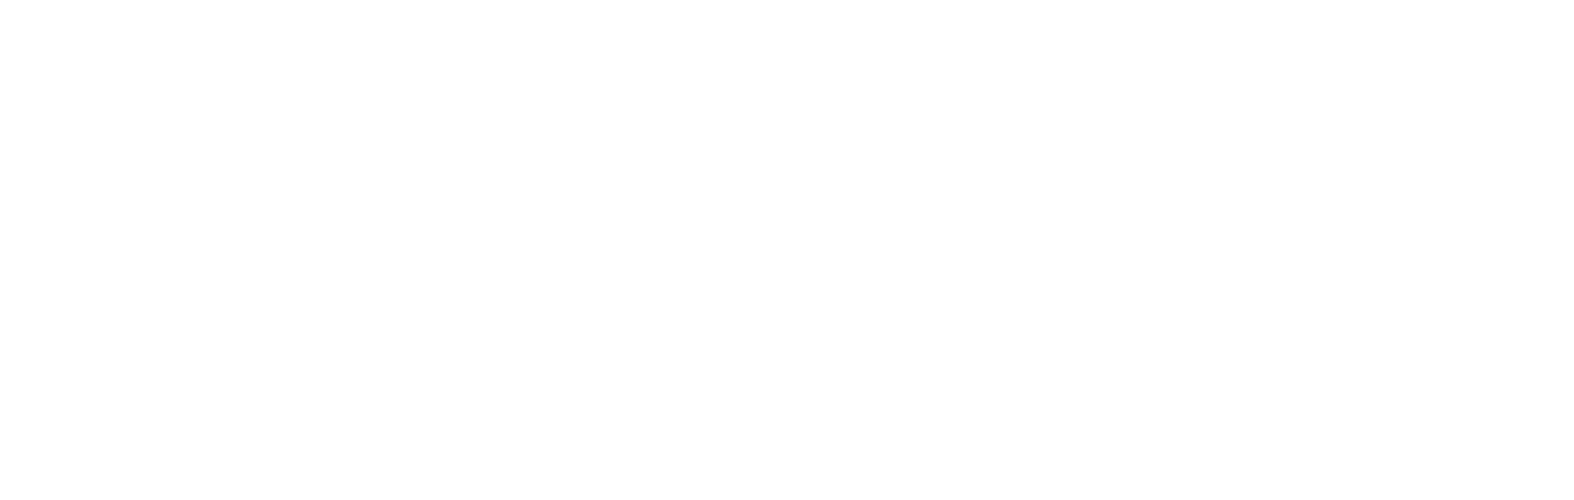 Southern Missouri Bancorp logo large for dark backgrounds (transparent PNG)